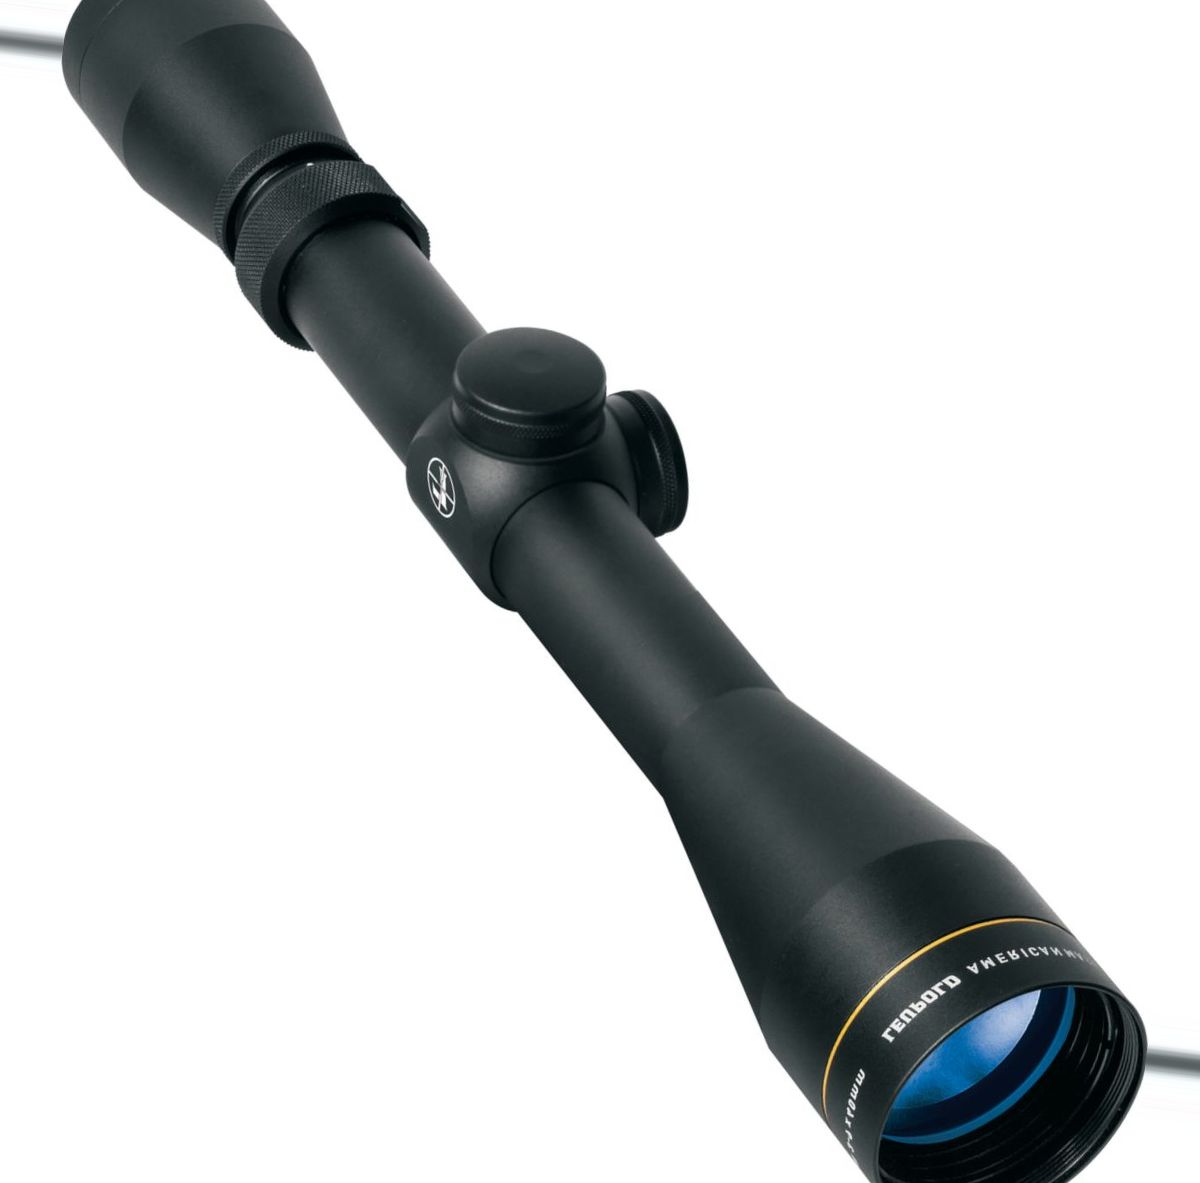 Leupold® American Marksman 3-9x40 Riflescope